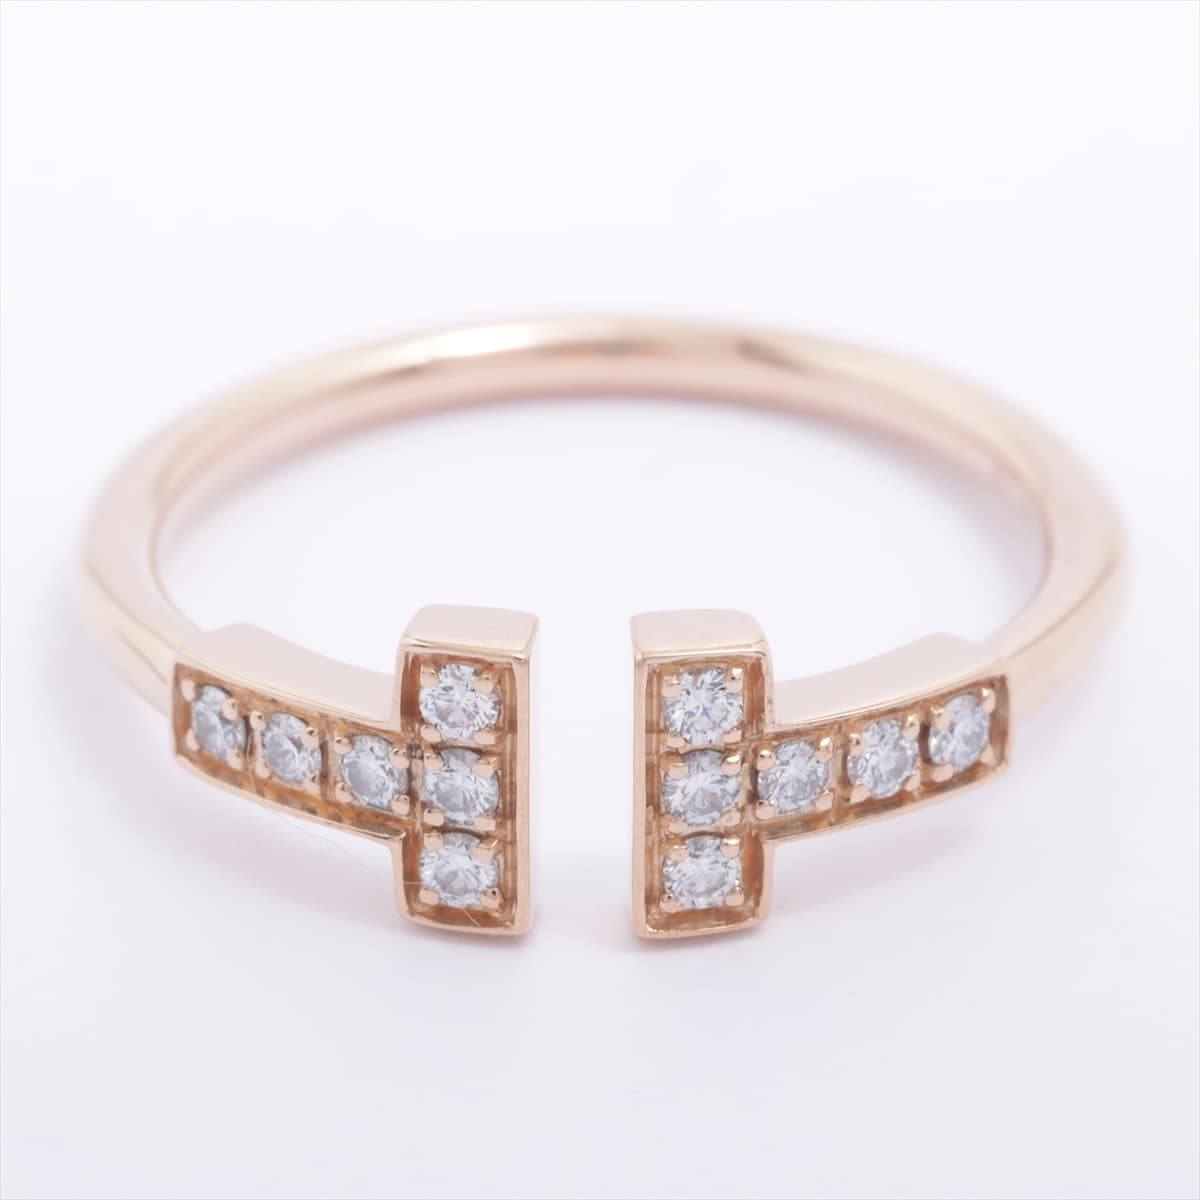 Tiffany T Wire diamond rings 750 PG 2.2g